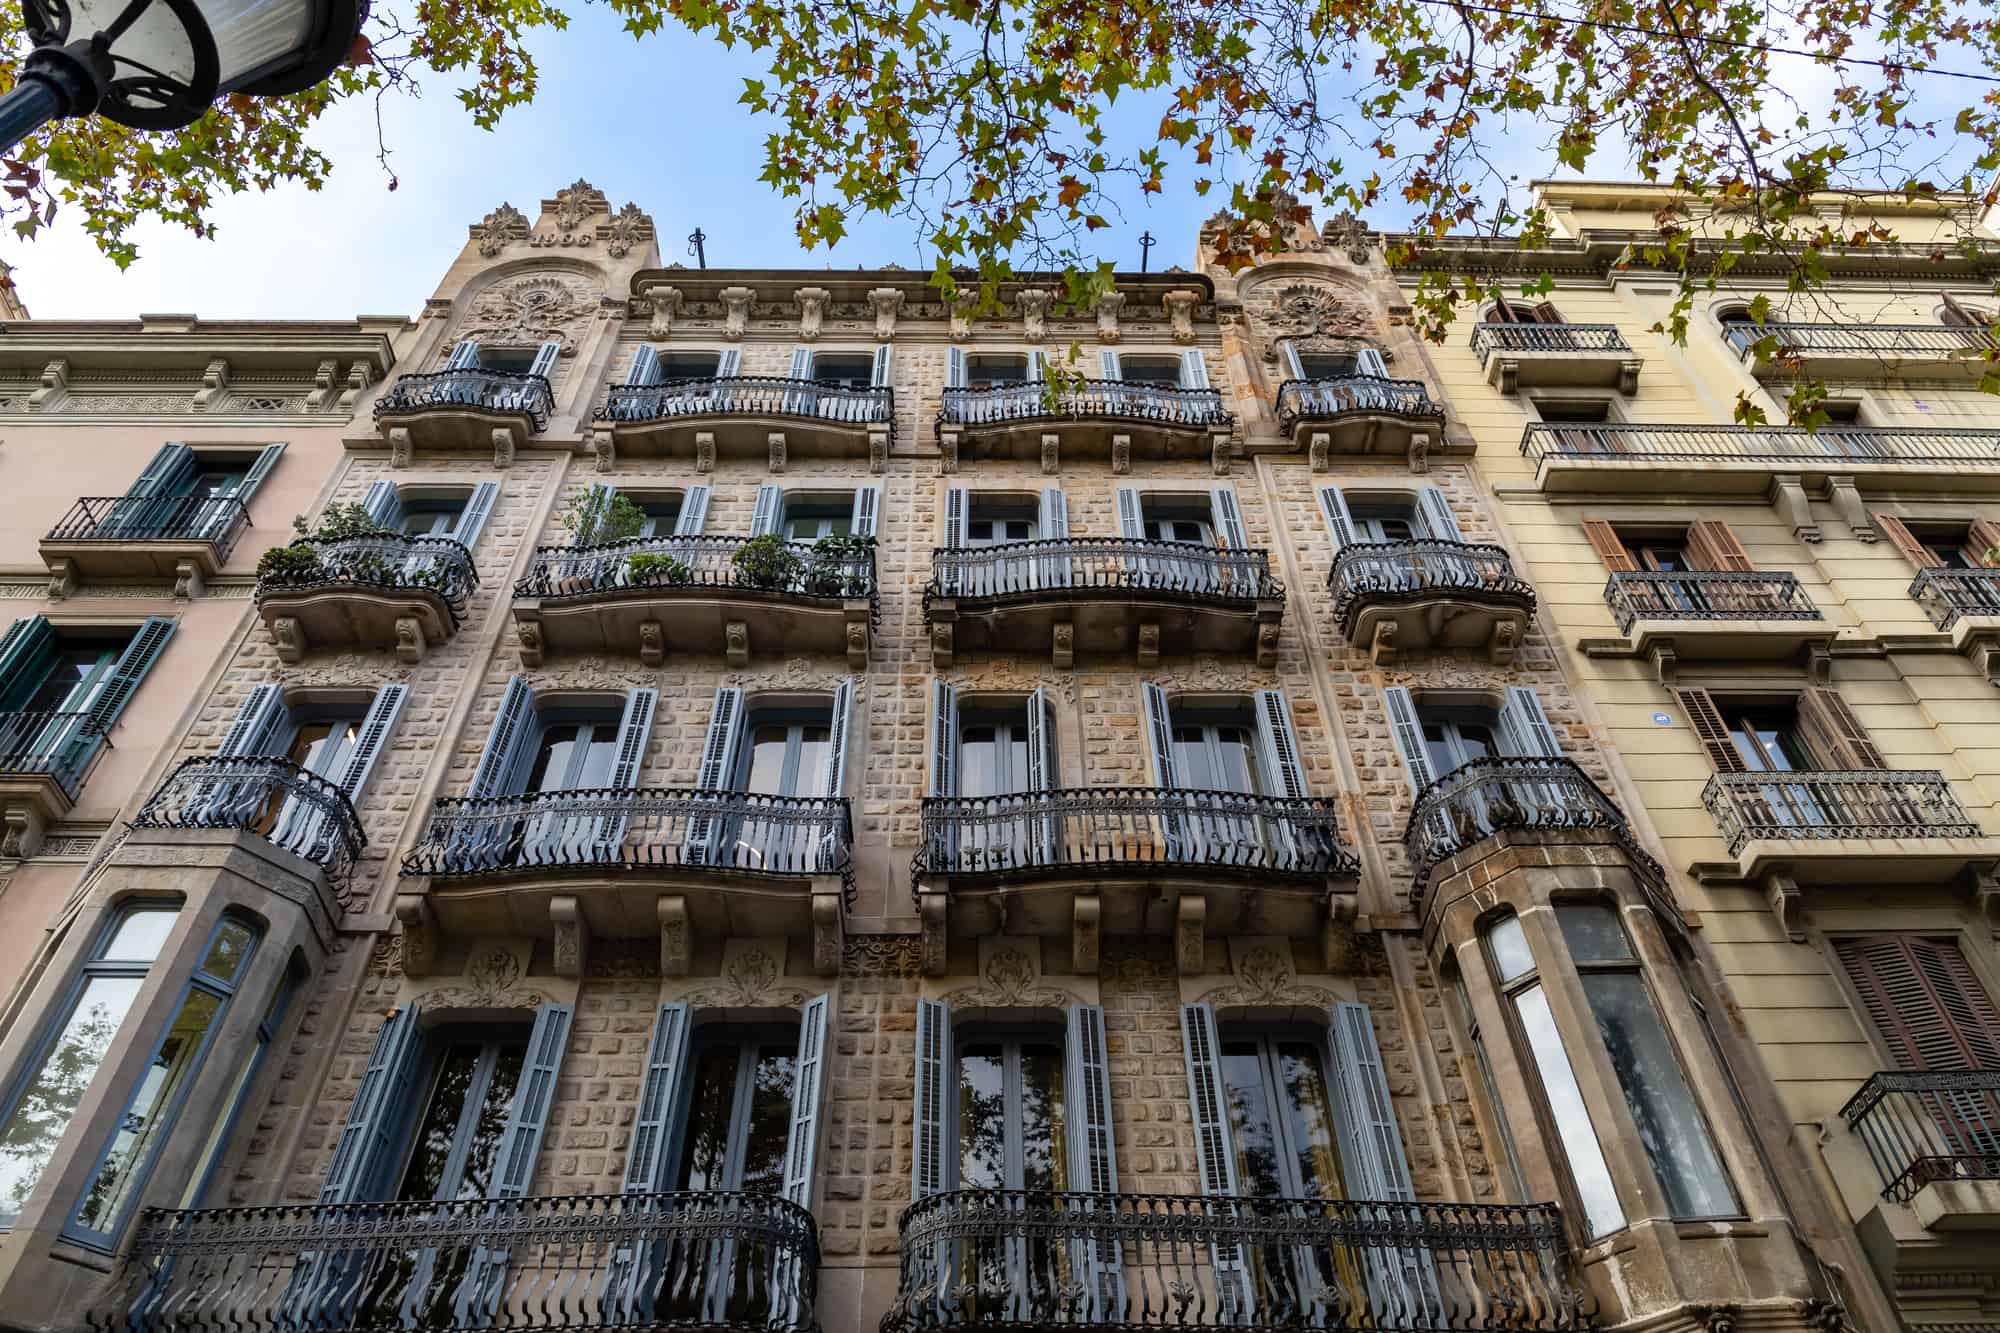 Barcelona, Catalonia, Spain - Facade of old apartment buildings